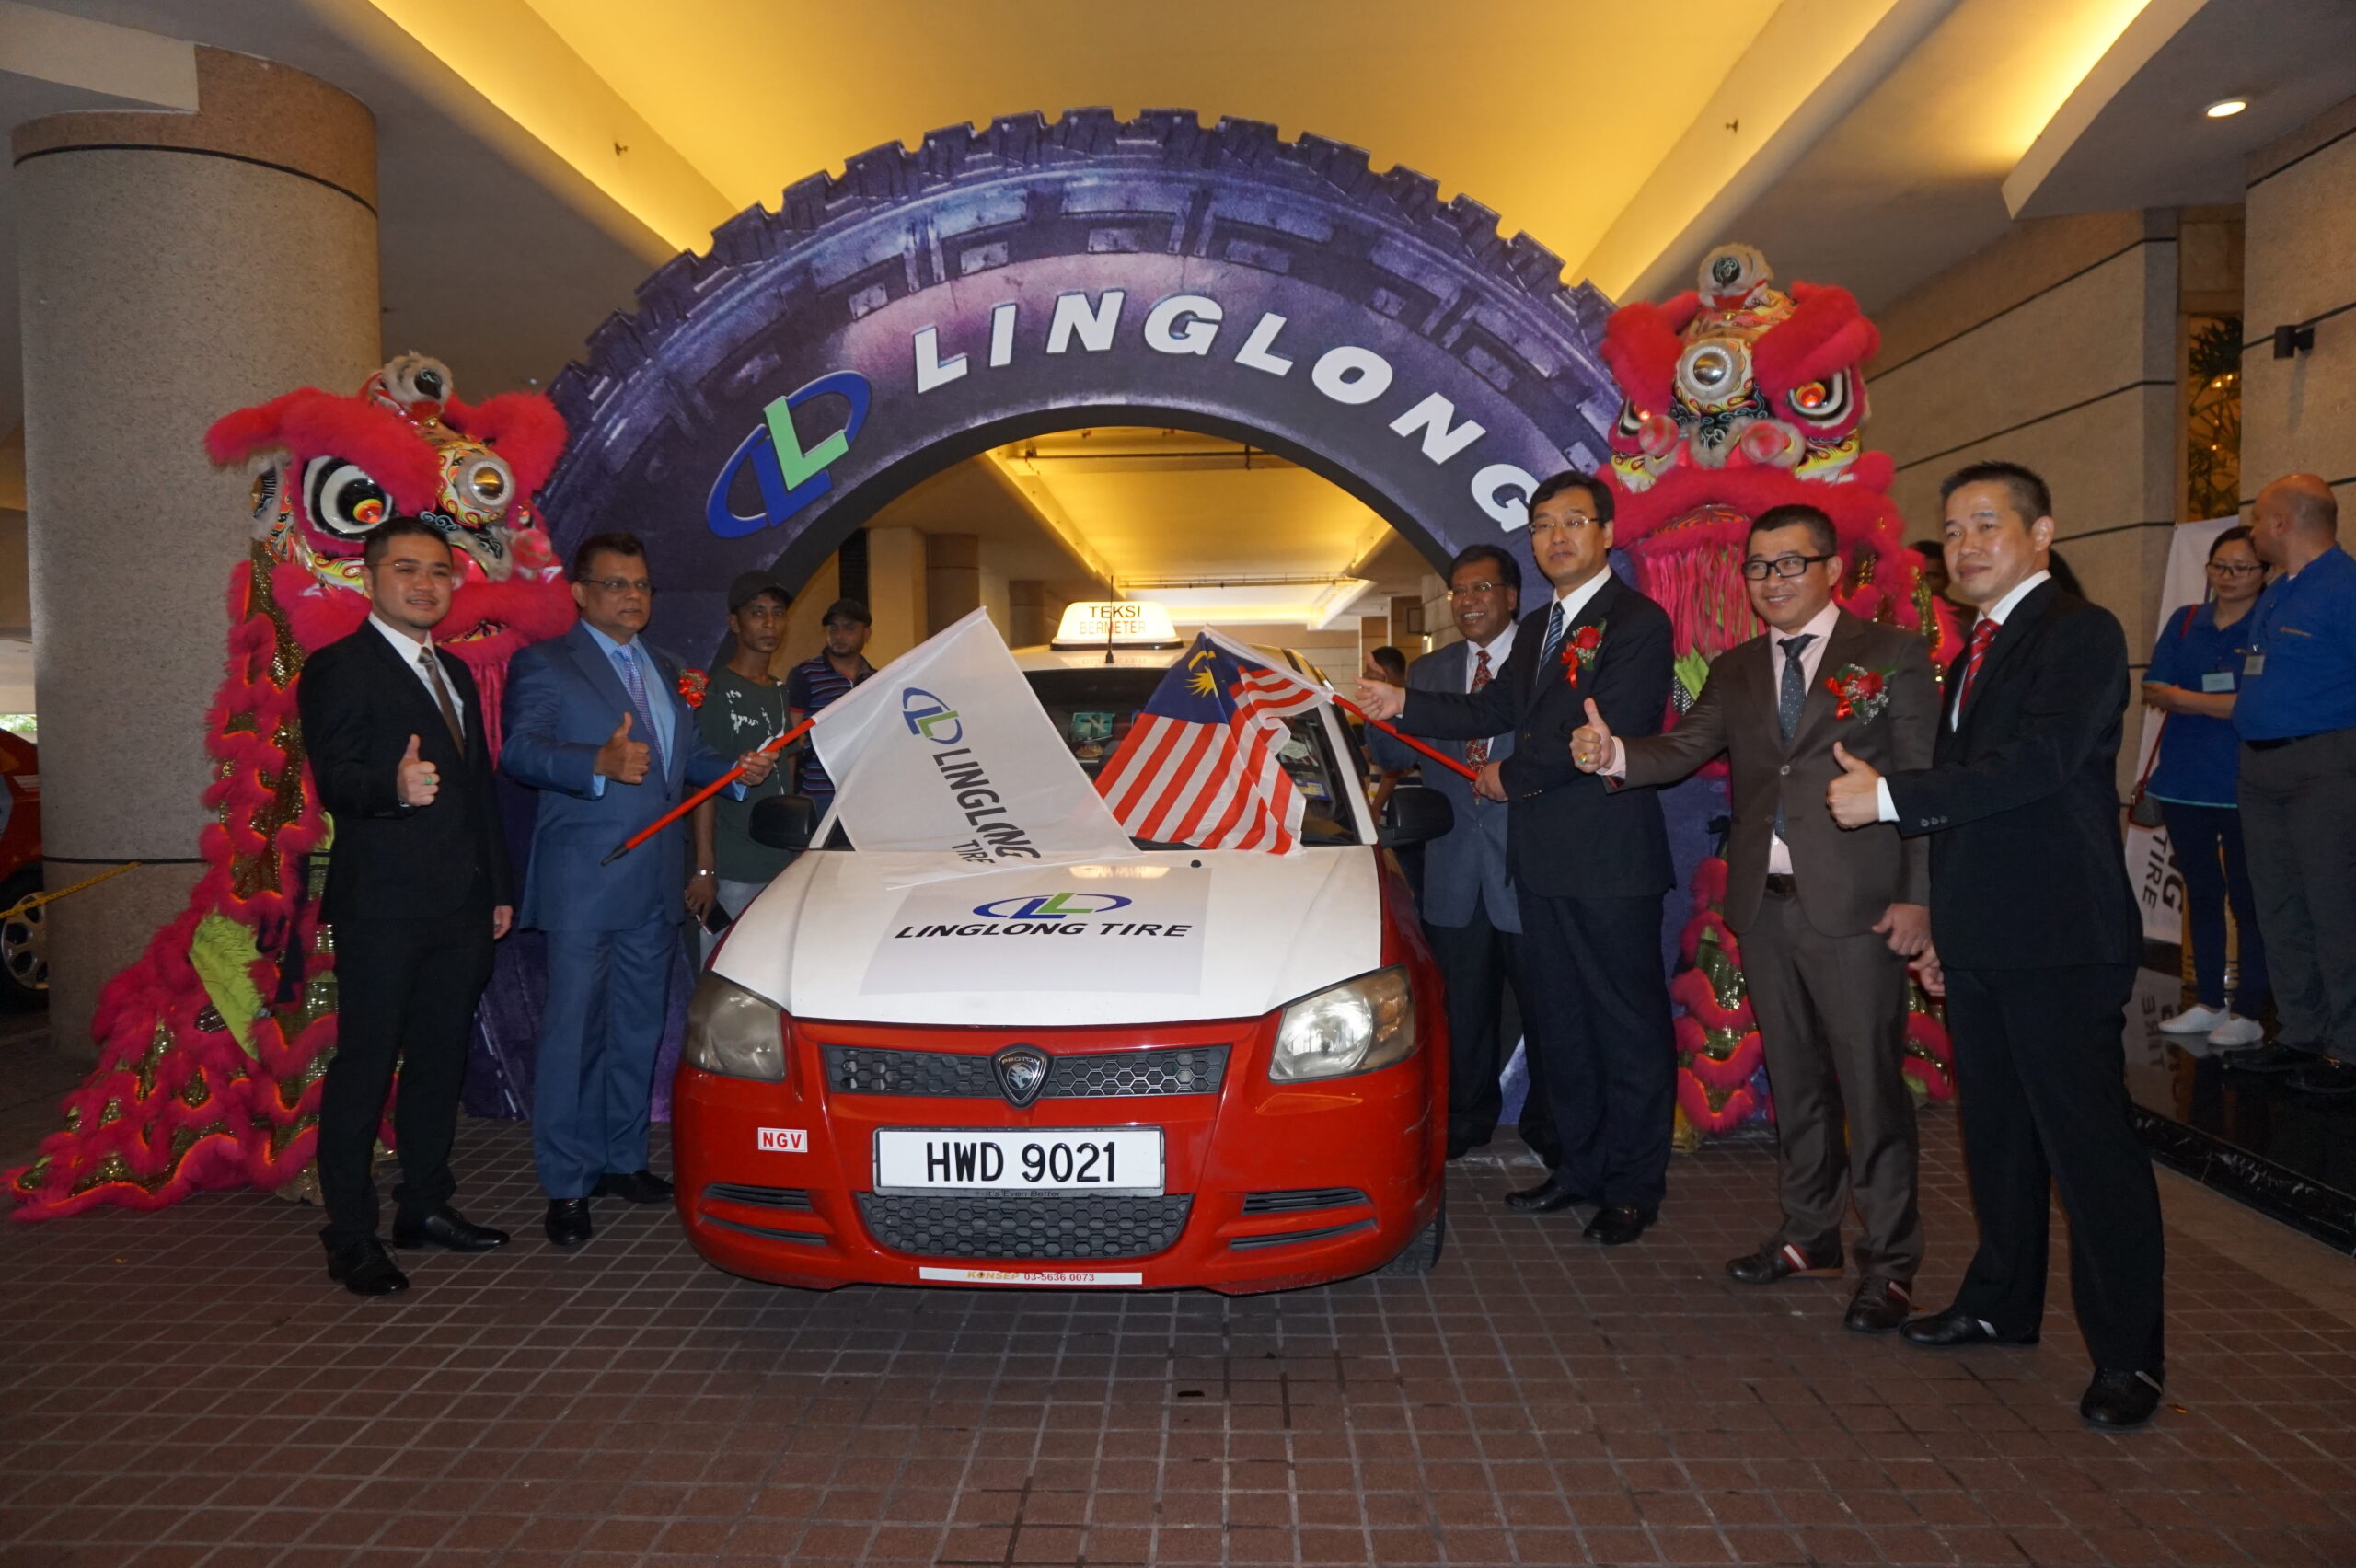 Linglong Tire Malaysia